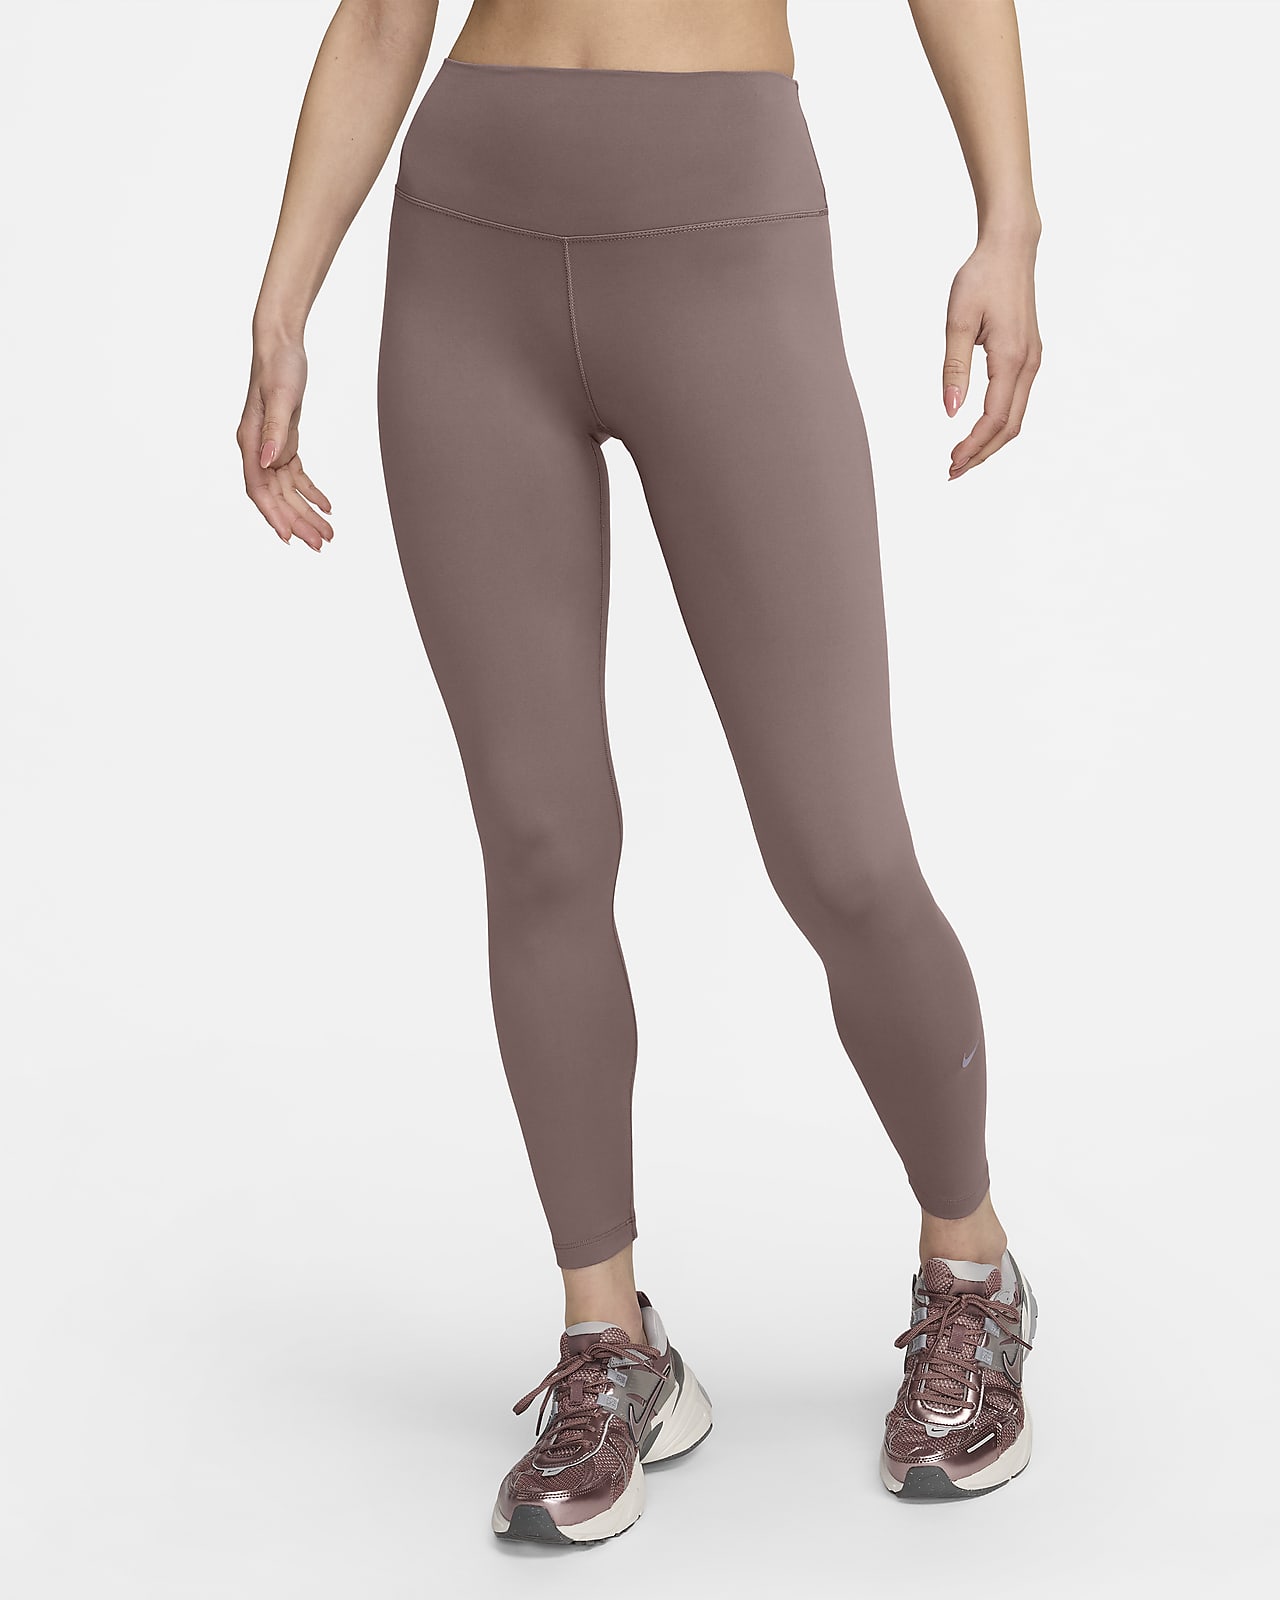 Nike One Leggings de talle alto y longitud completa - Mujer